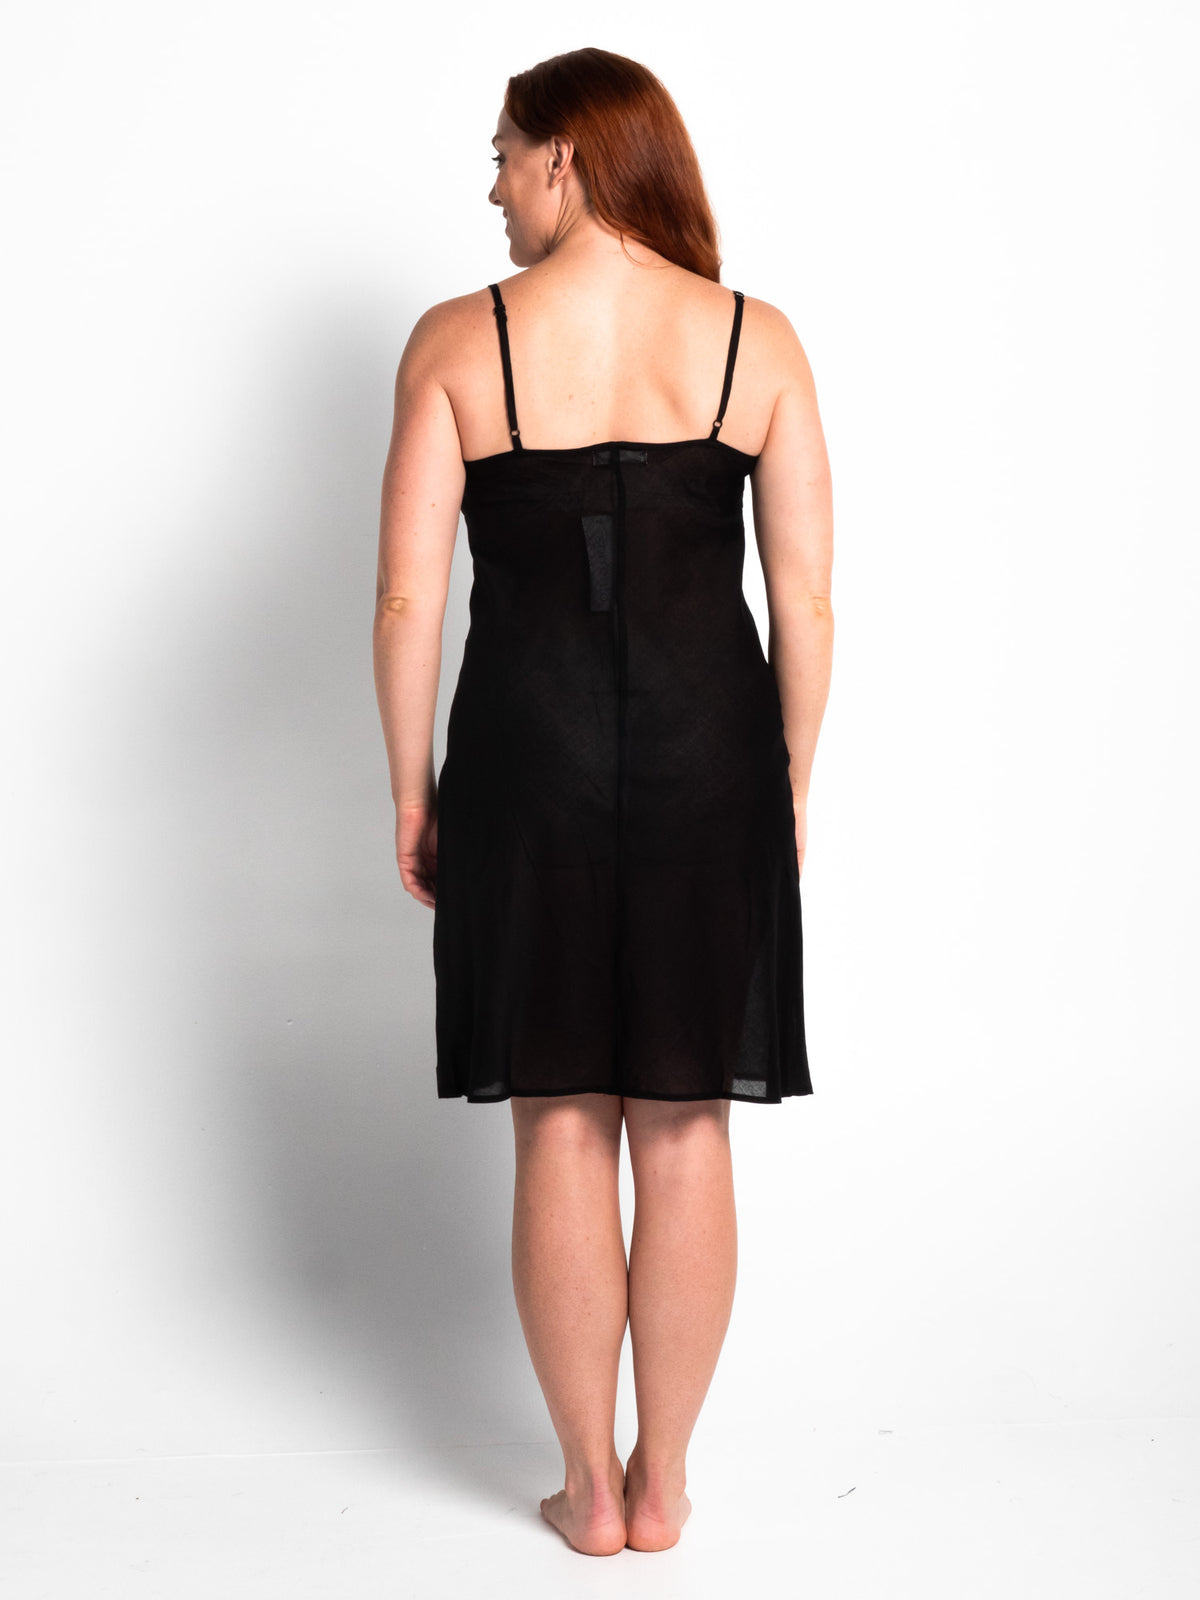 Sorrento Black Cotton Slip Dress Length